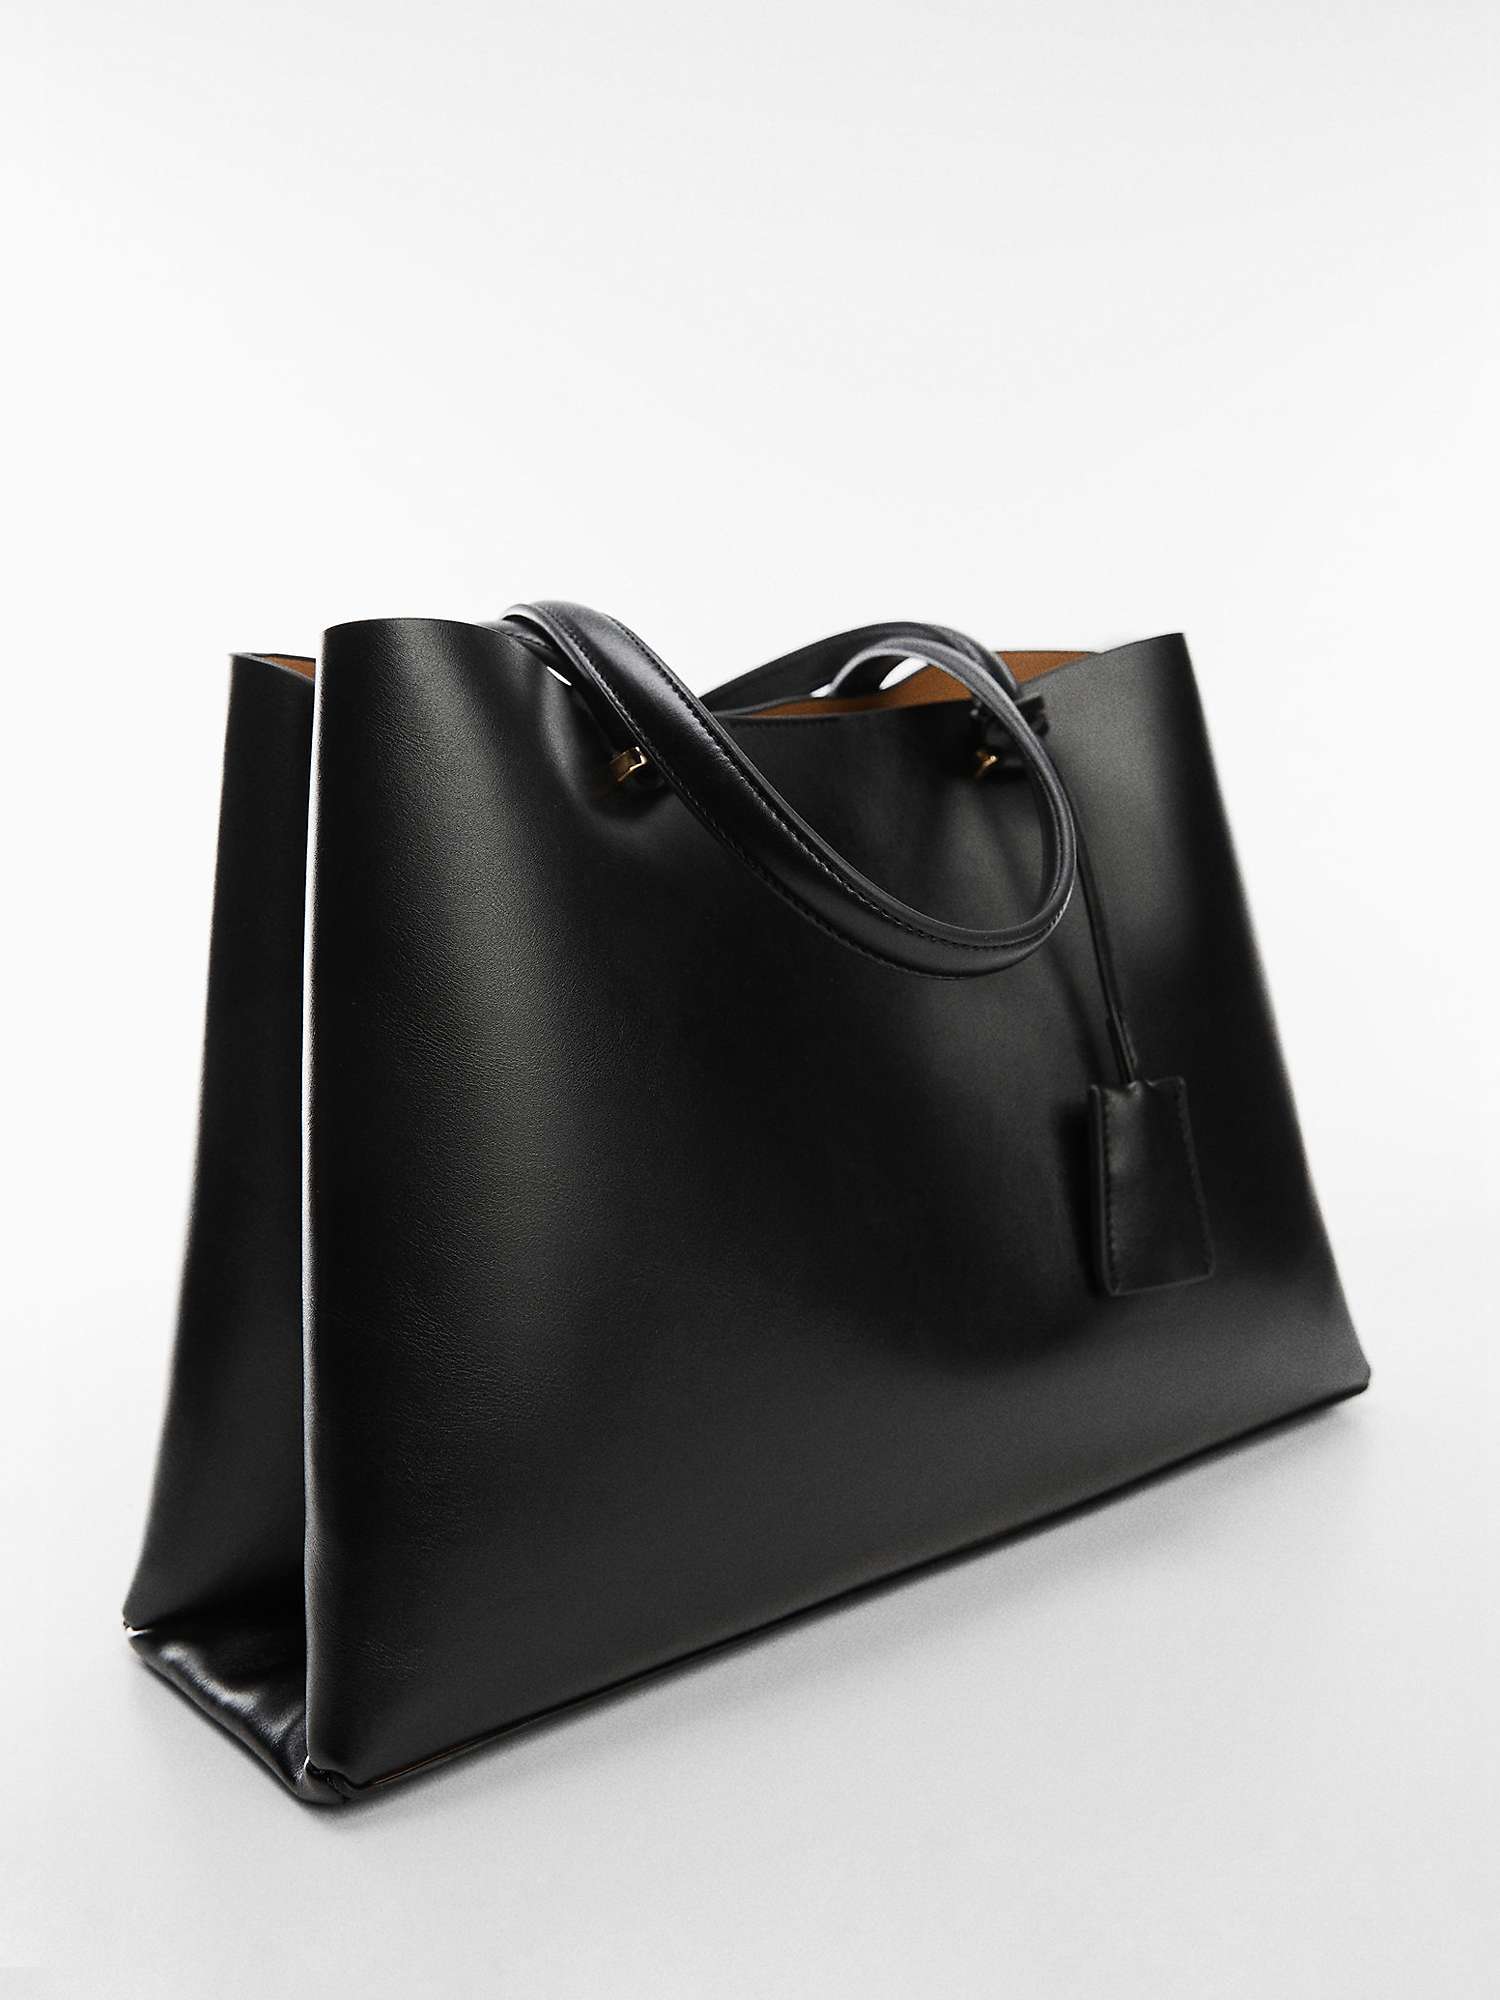 Mango Bello Double Compartment Bag, Black at John Lewis & Partners